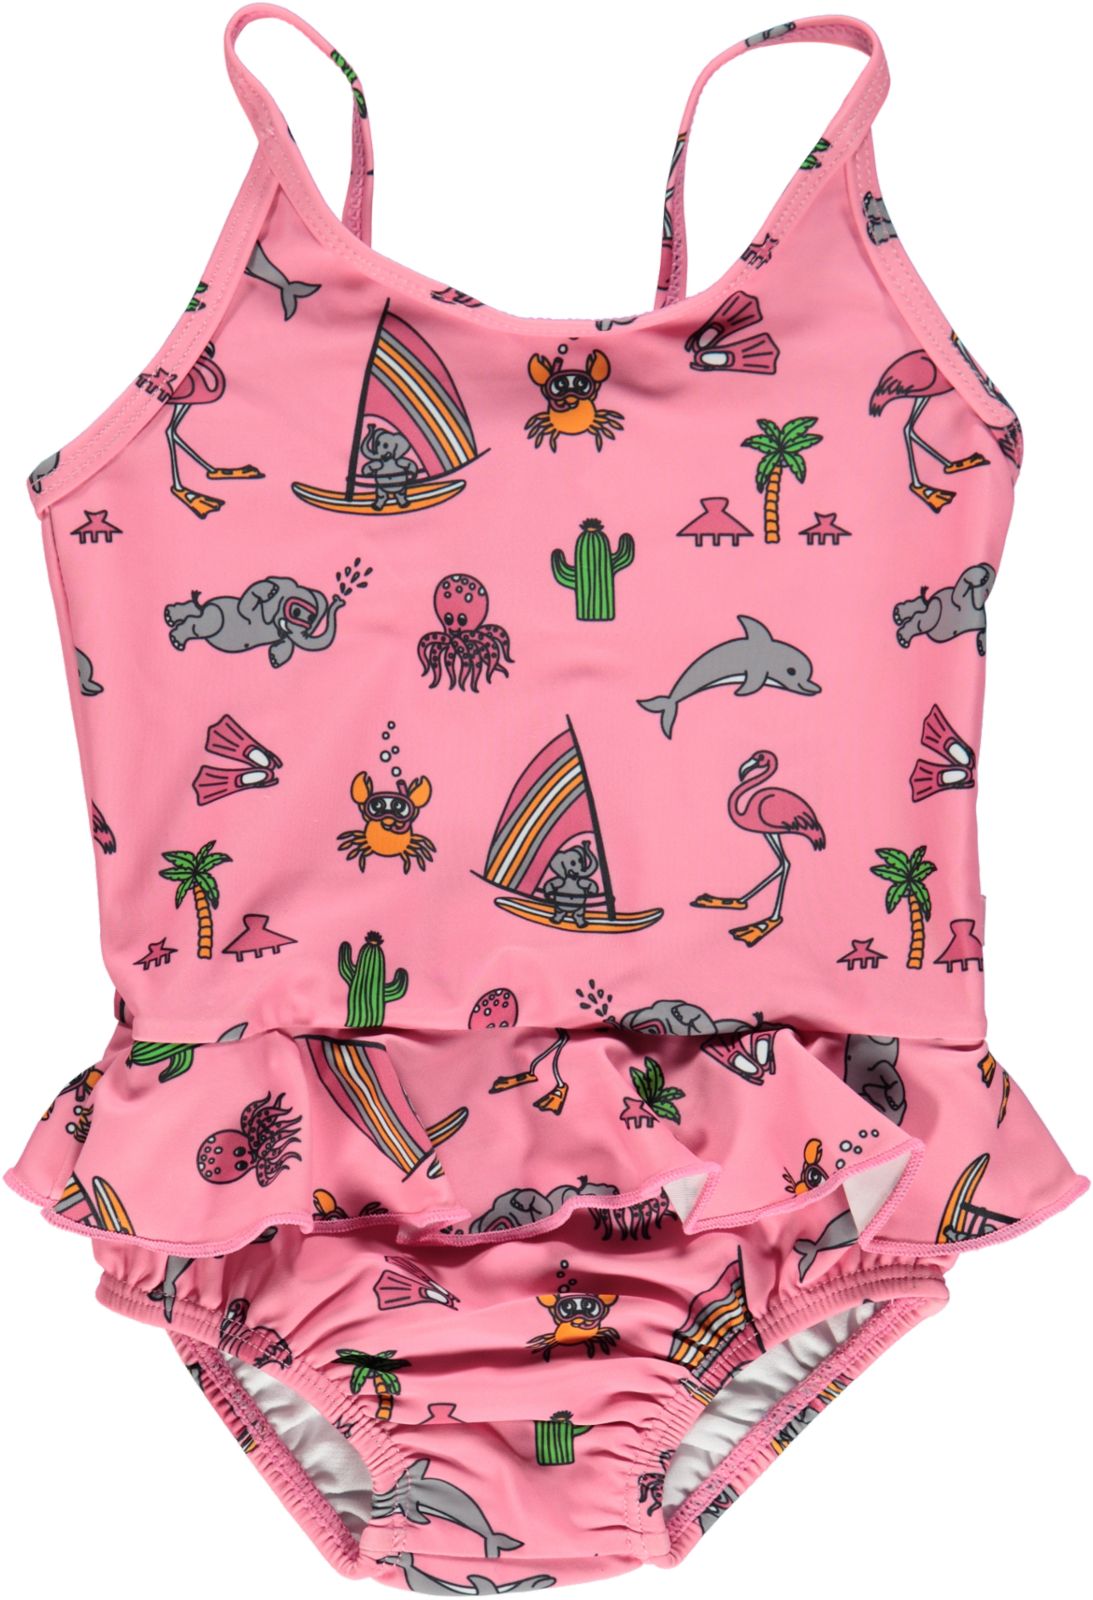 UV50 Baby swimsuit with ruffles and seaworld